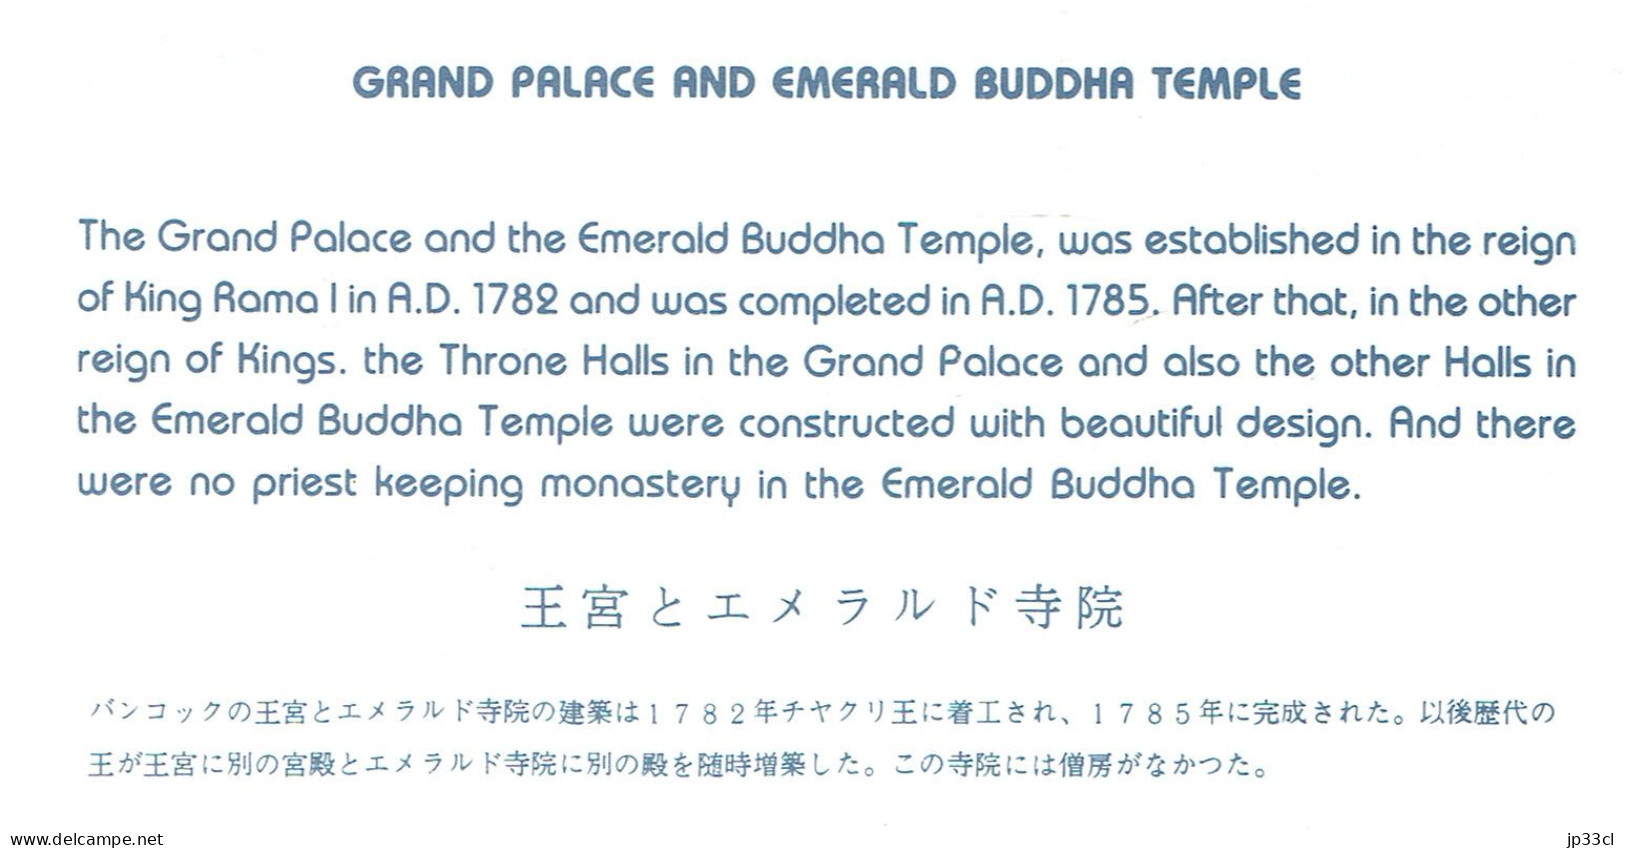 Bouddhisme : Pochette De 12 CP Vierges Du Grand Palace And Emerald Buddha Temple, Bangkok, Thaïlande - China